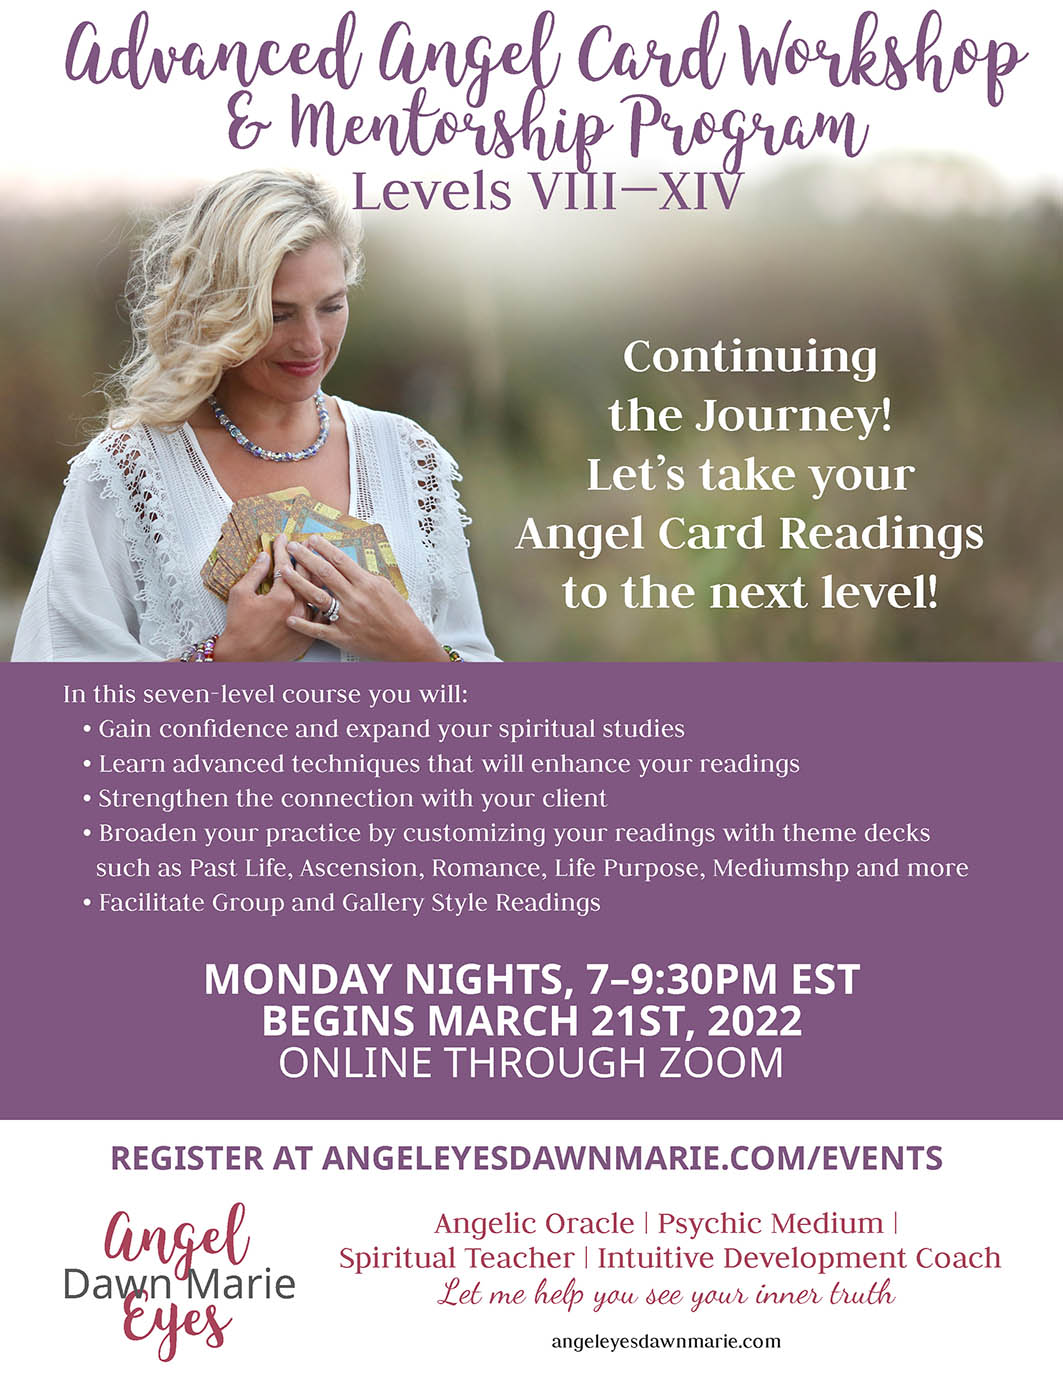 advanced angel card workshop flyer